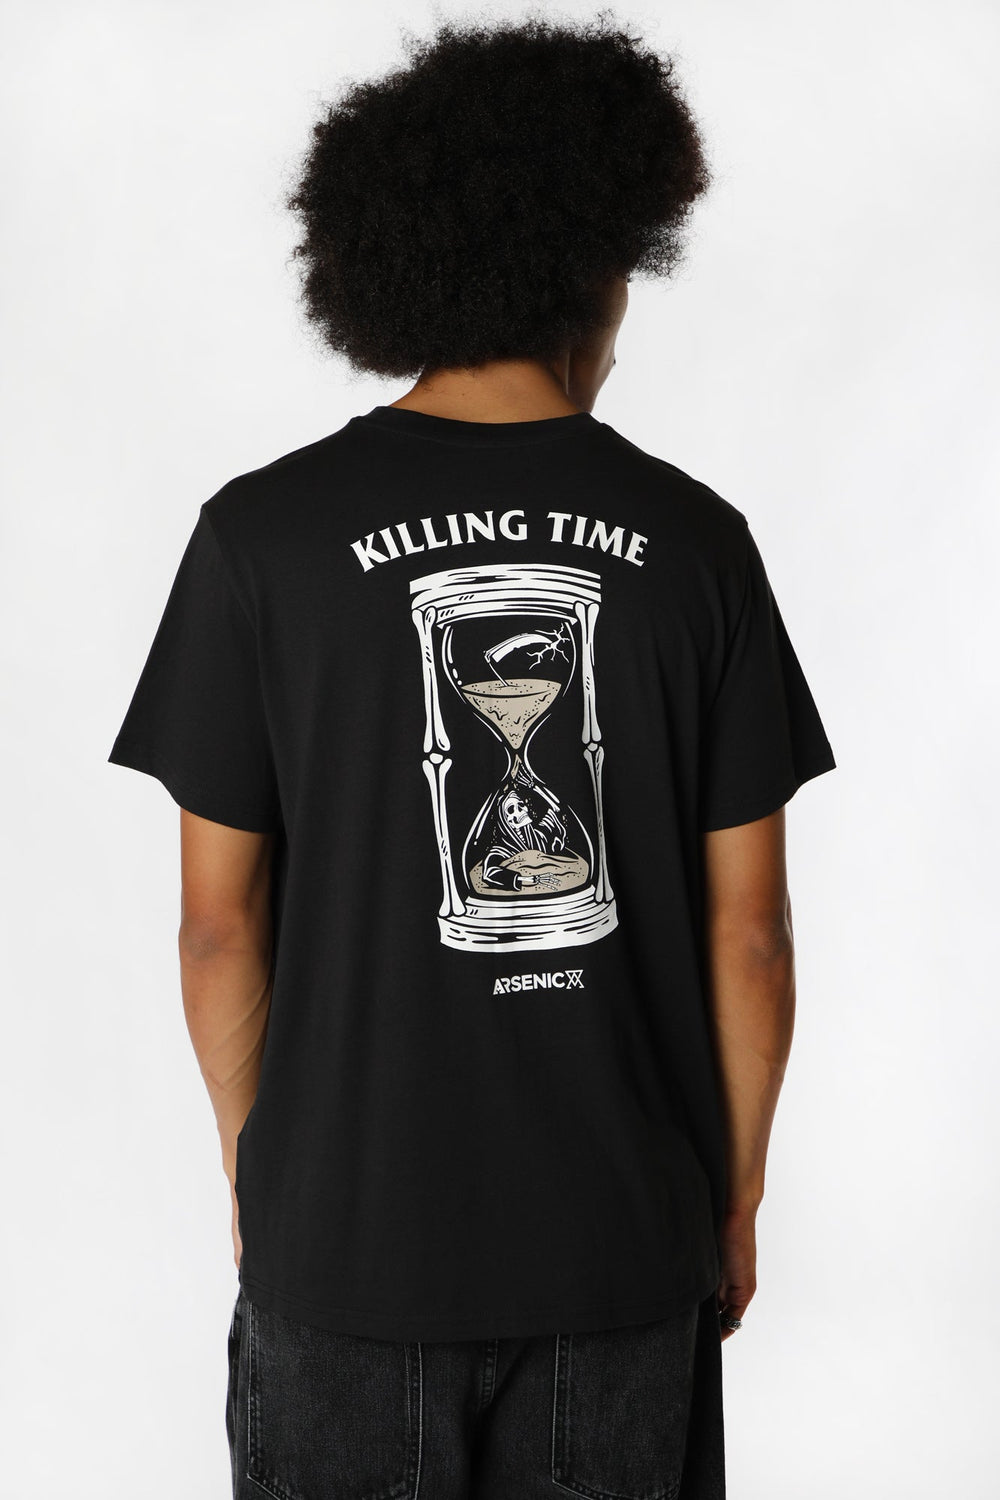 T-Shirt Imprimé Killing Time Arsenic Homme Noir